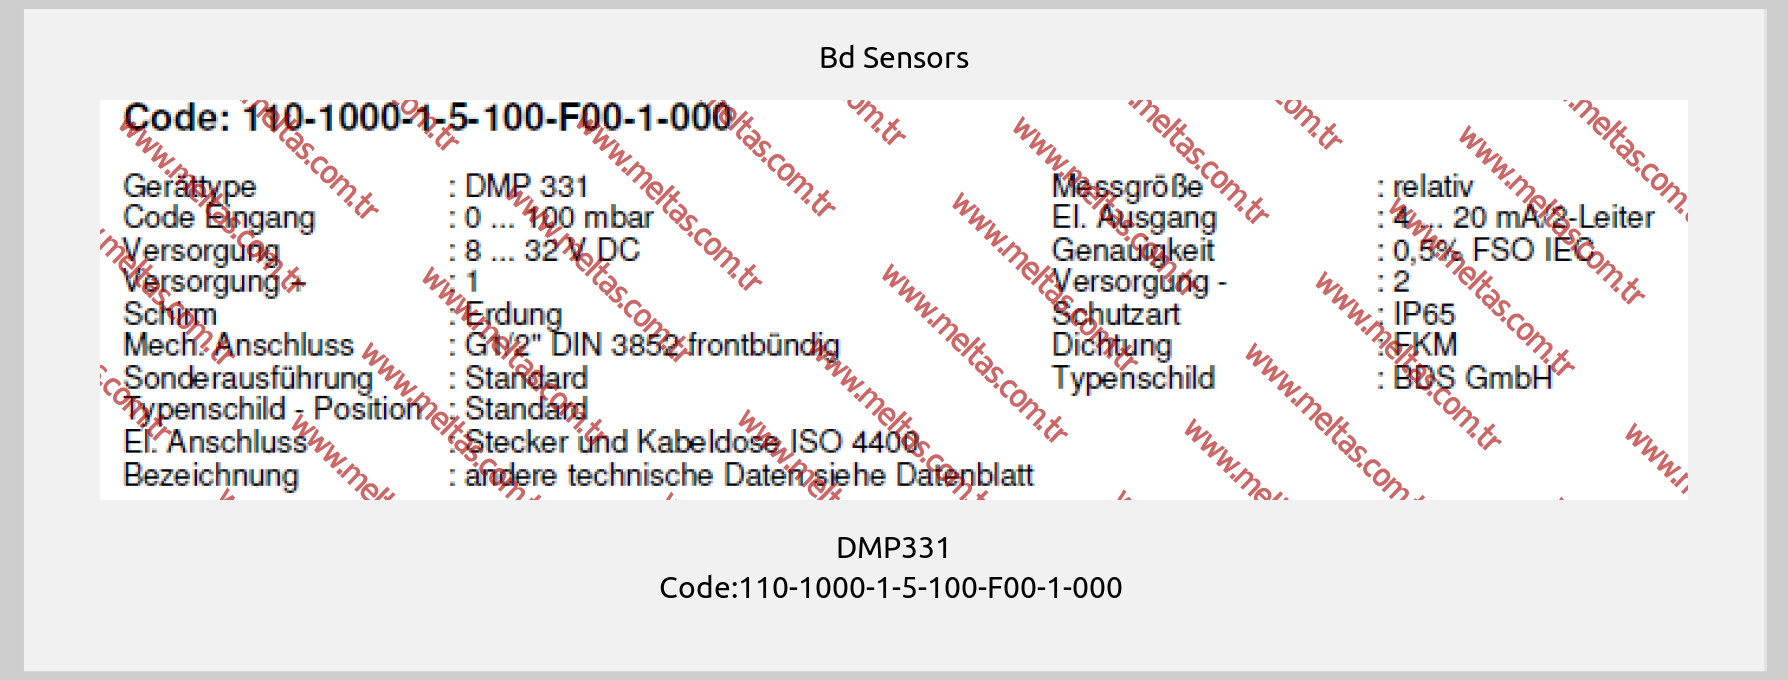 Bd Sensors-DMP331 Code:110-1000-1-5-100-F00-1-000 